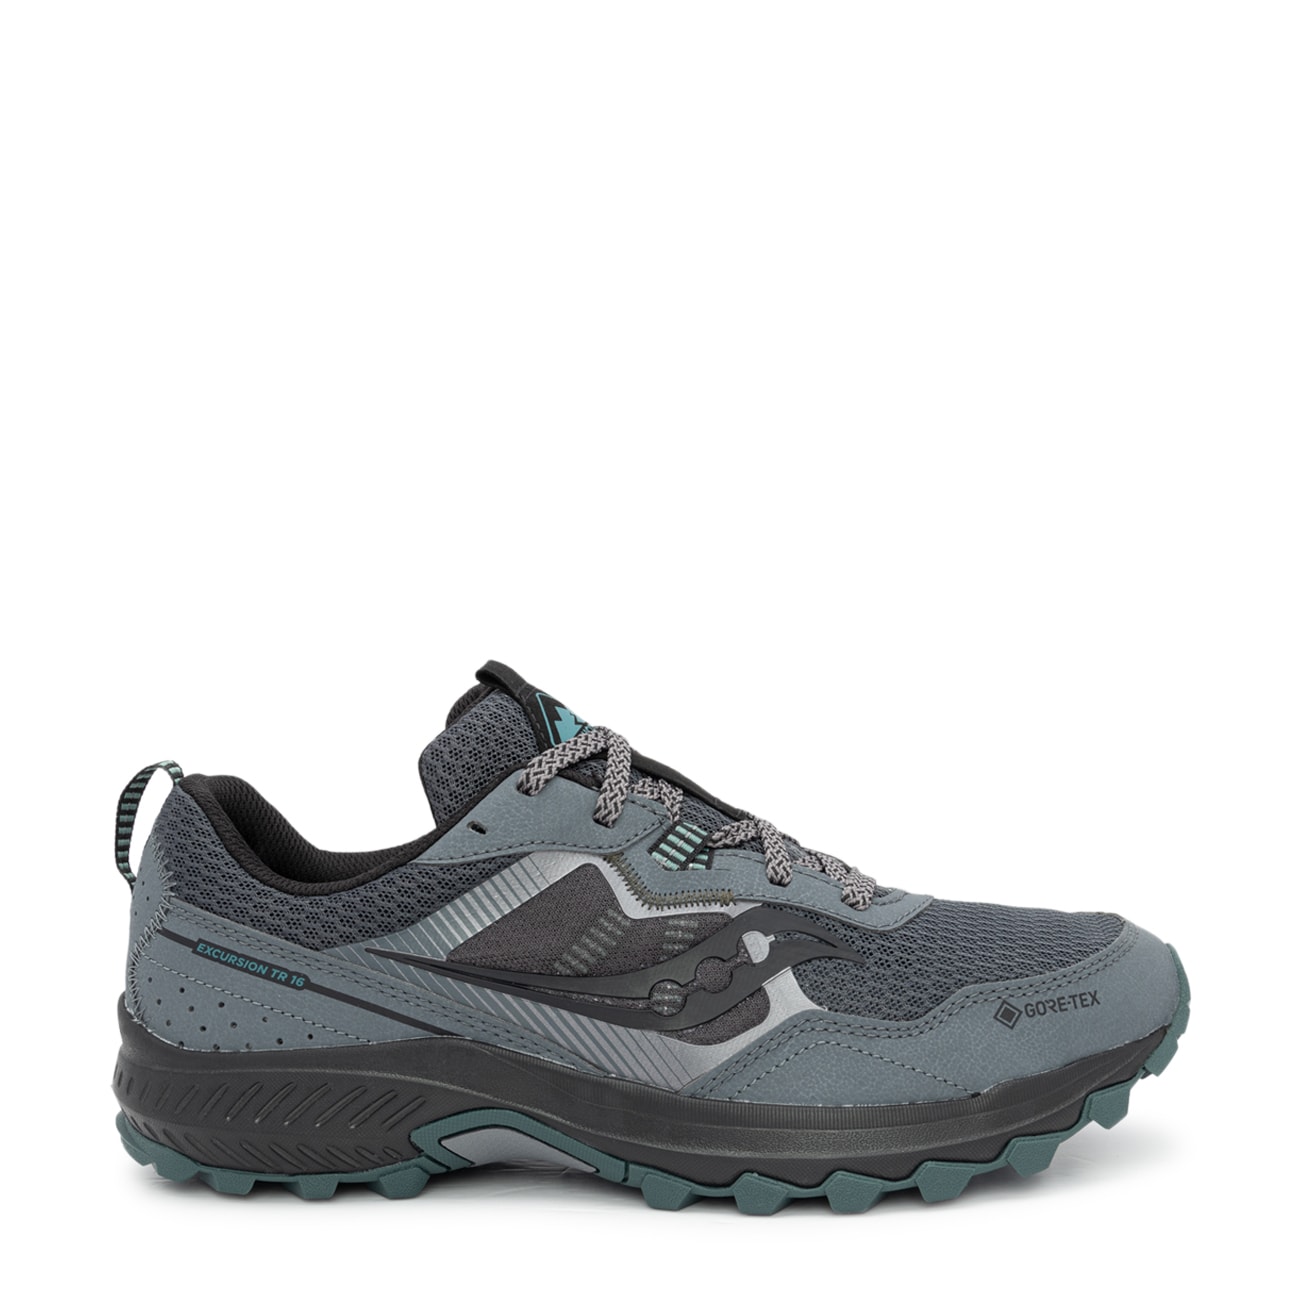 Saucony Men's Excursion TR16 Gtx Trail Running Shoe | The Shoe Company